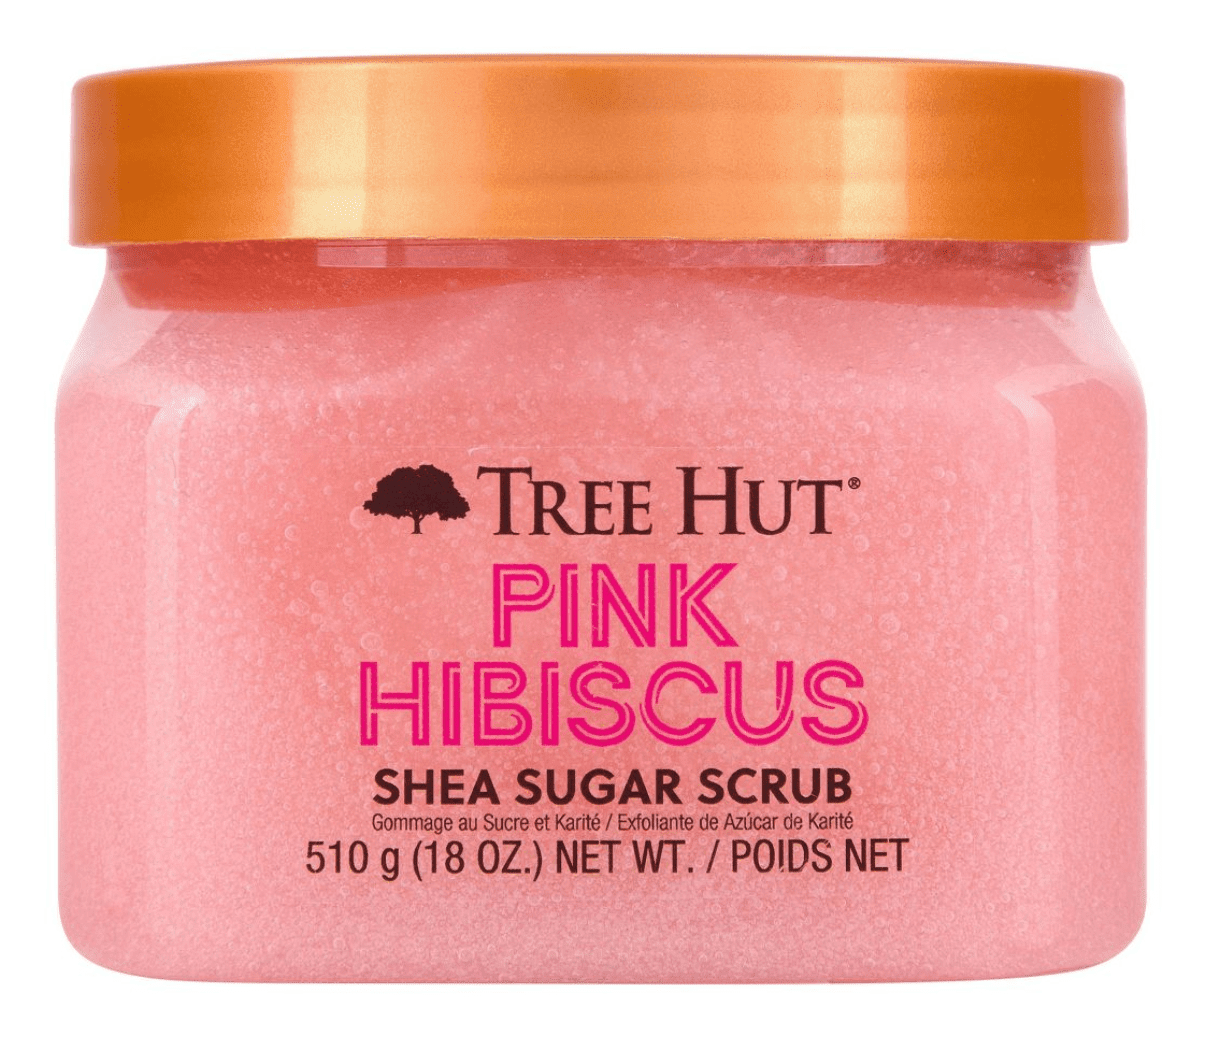 Tree hut - Body scrub "pink hibiscus" - 510g - Tree Hut - Ethni Beauty Market